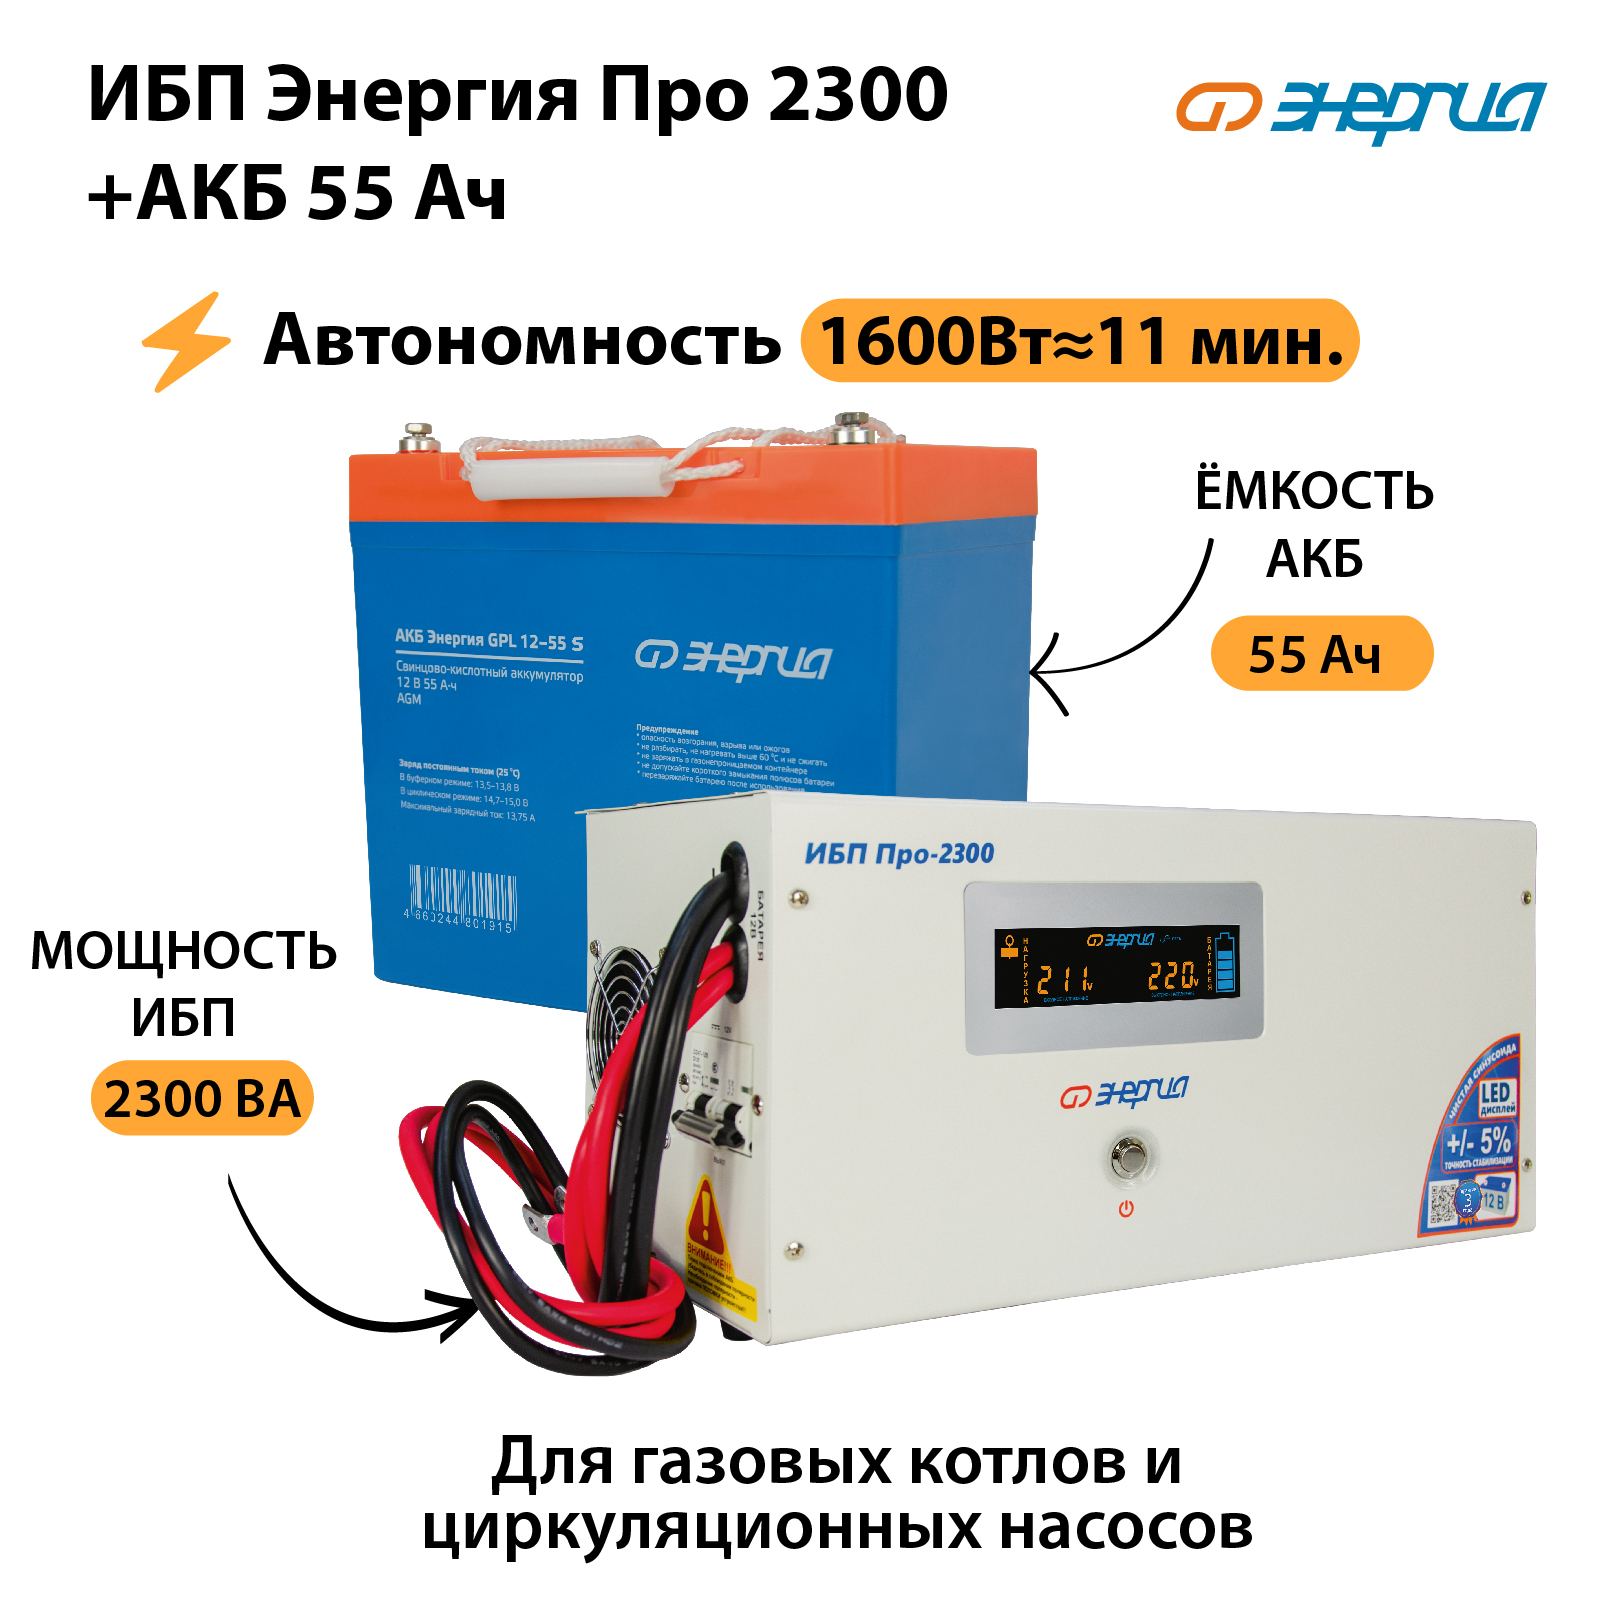 ИБП Энергия Про 2300 + Аккумулятор S 55 Ач (1600Вт - 11мин)